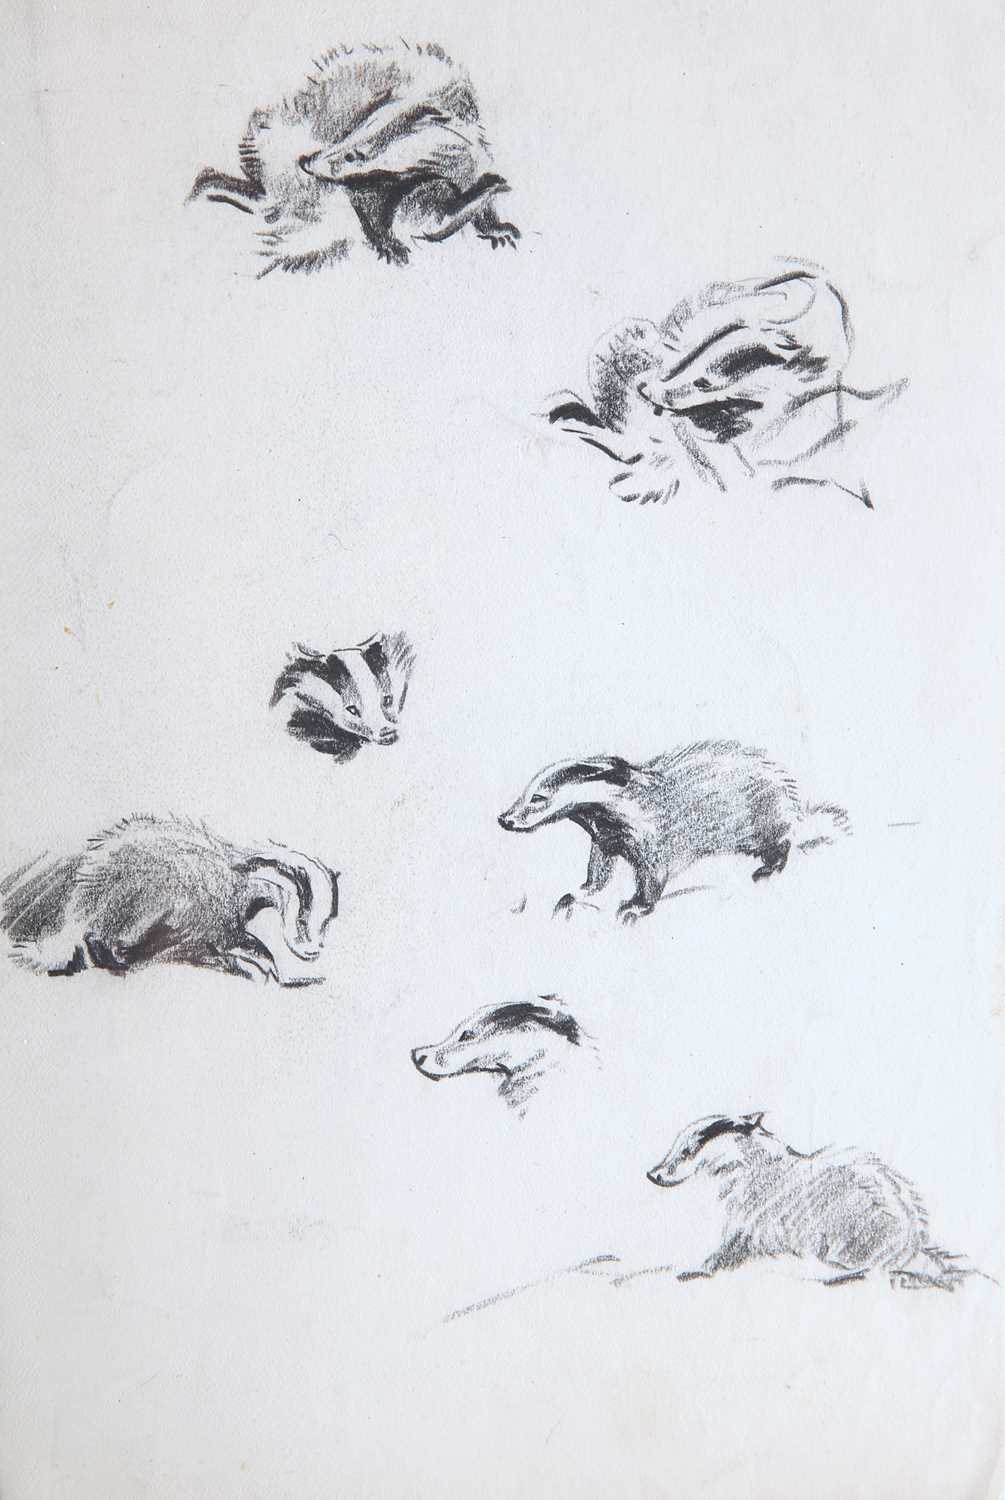 EILEEN ALICE SOPER (1905-1990) TWENTY-FIVE ORIGINAL DRAWINGS OF ANIMALS - Image 3 of 32